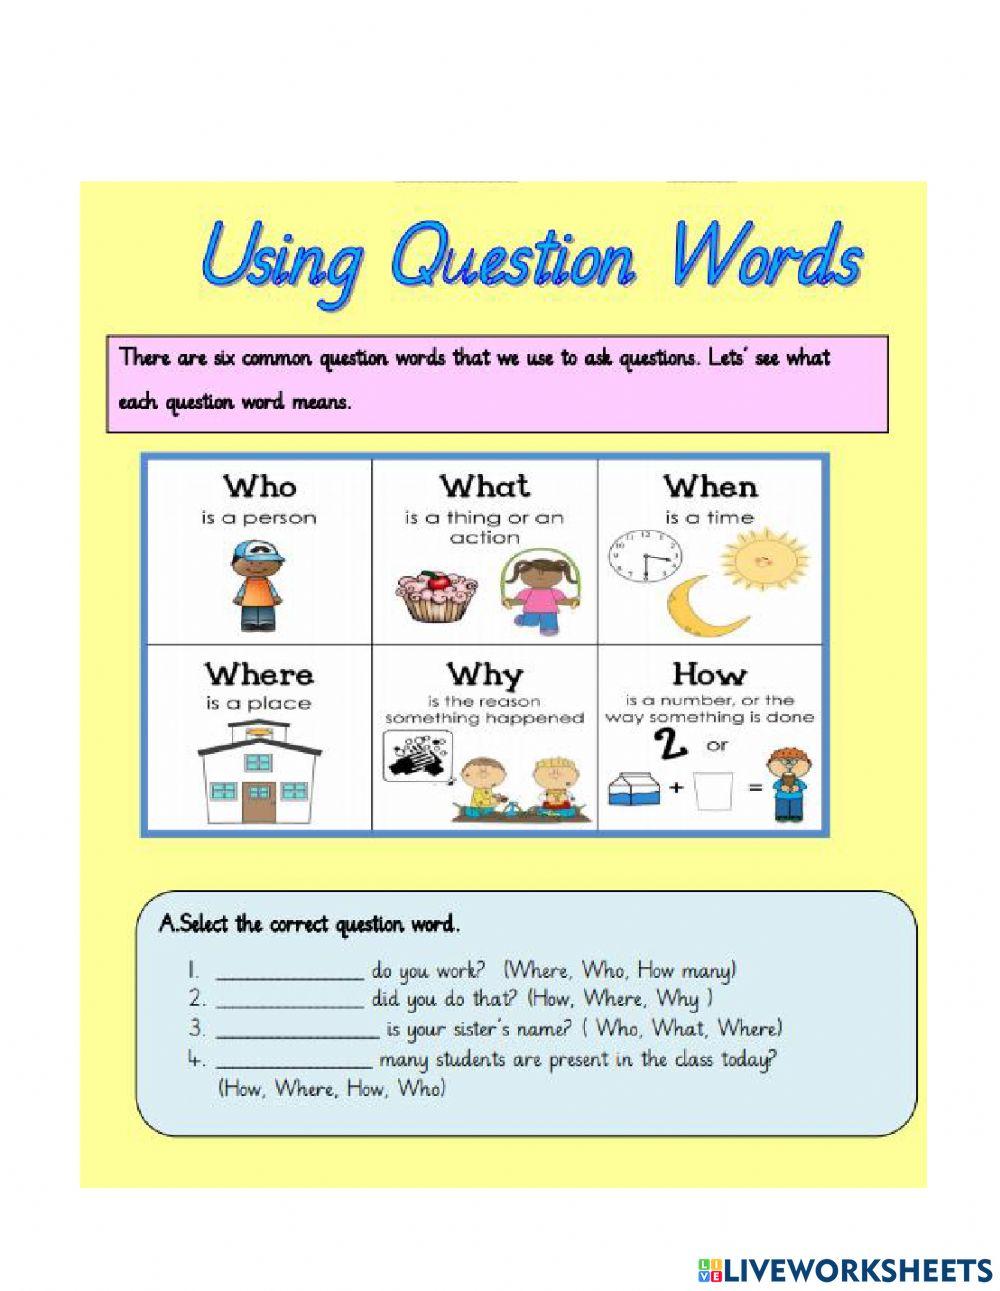 Questions words worksheet 